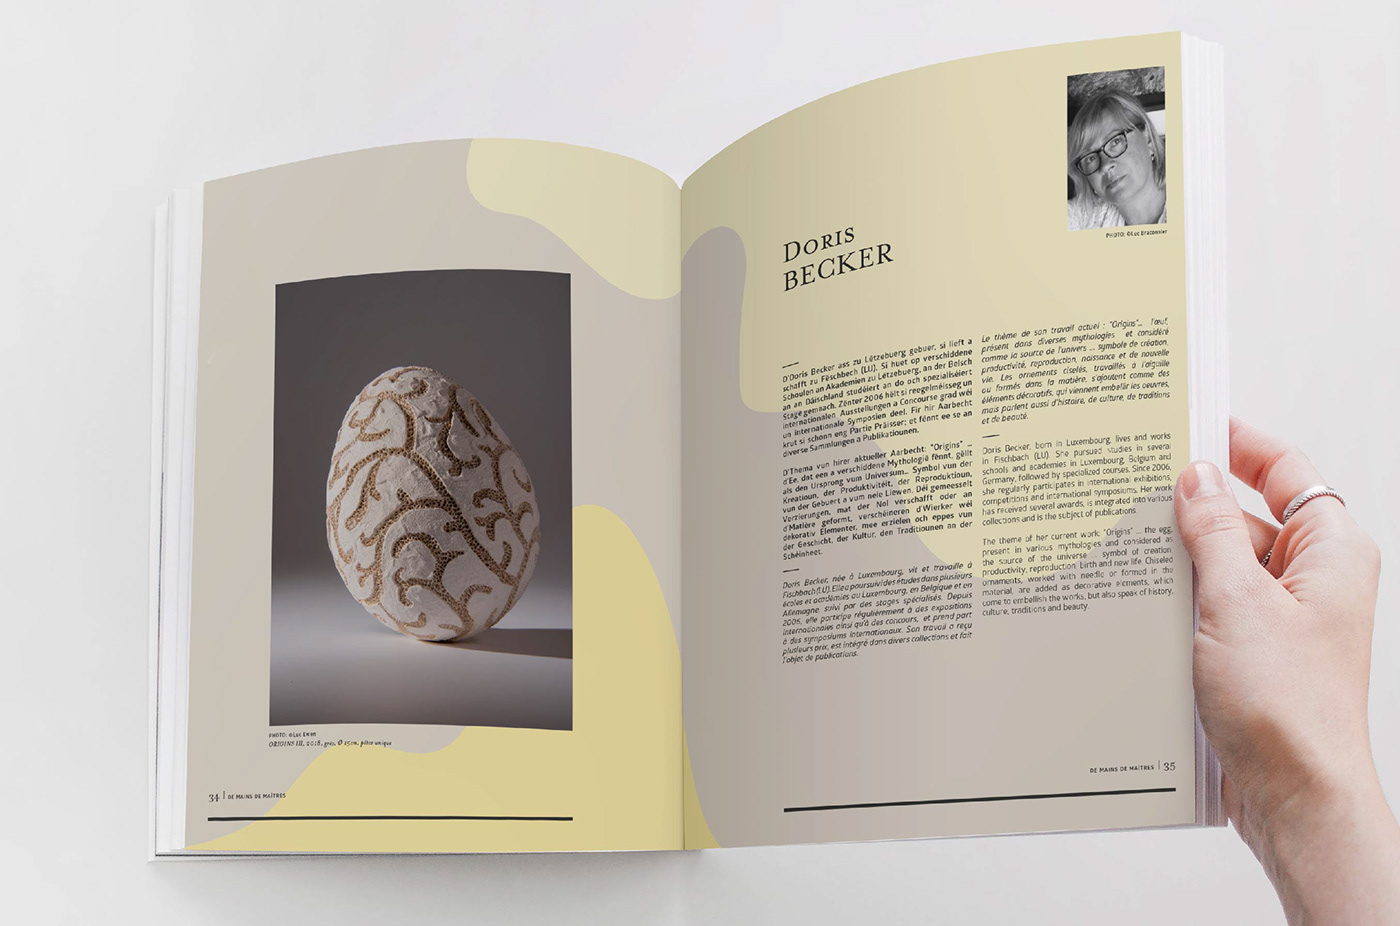 brand design art craft biennal luxembourg arts flyer brochure